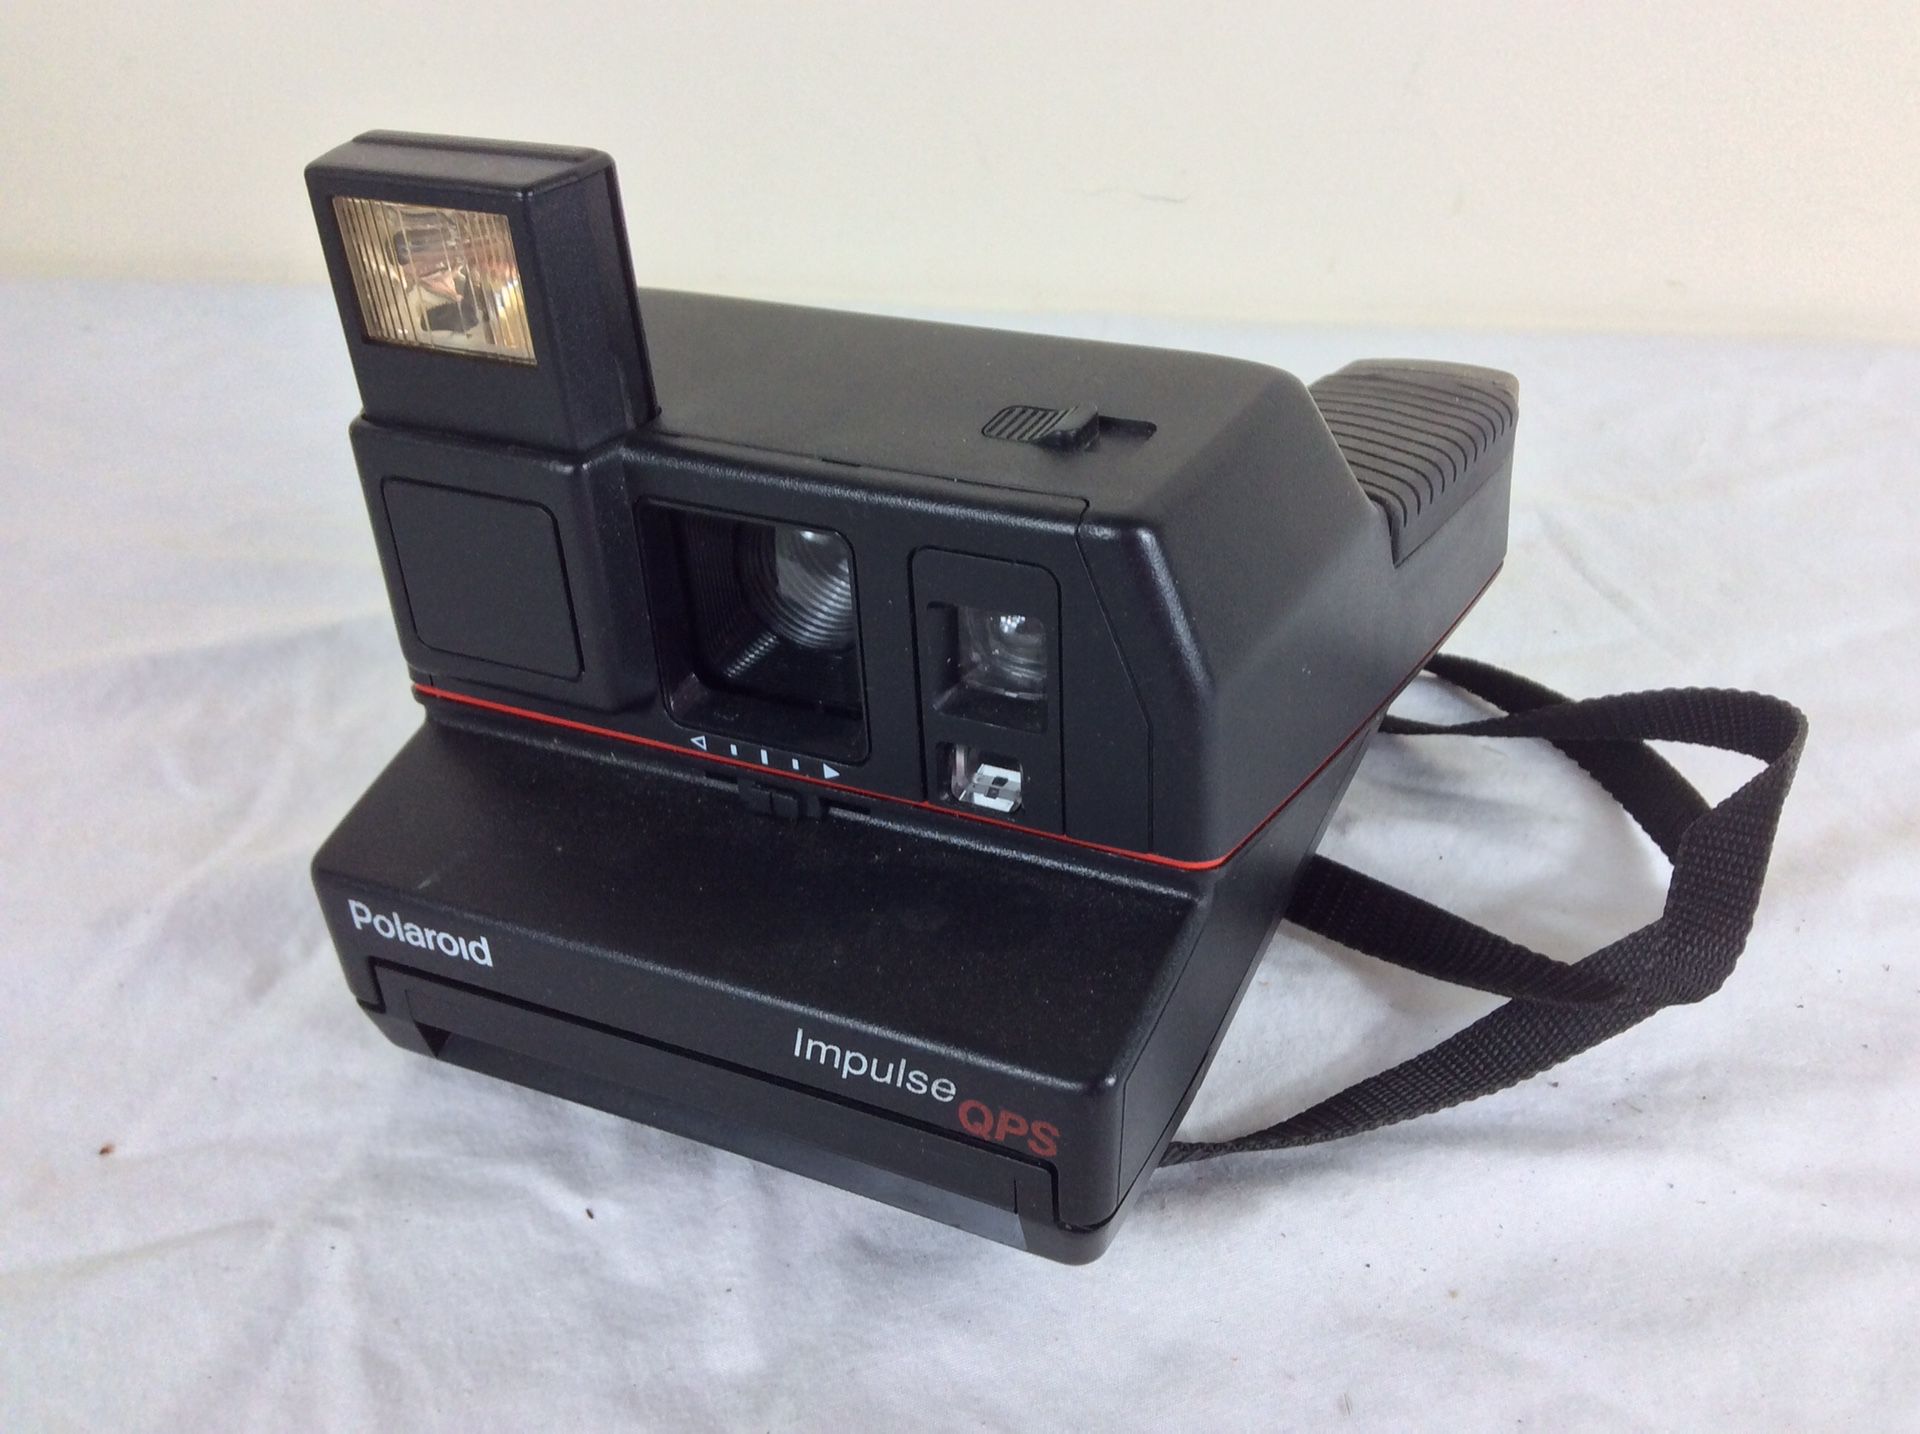 Vintage Polaroid Impulse QPS Instant Film Camera with Strap